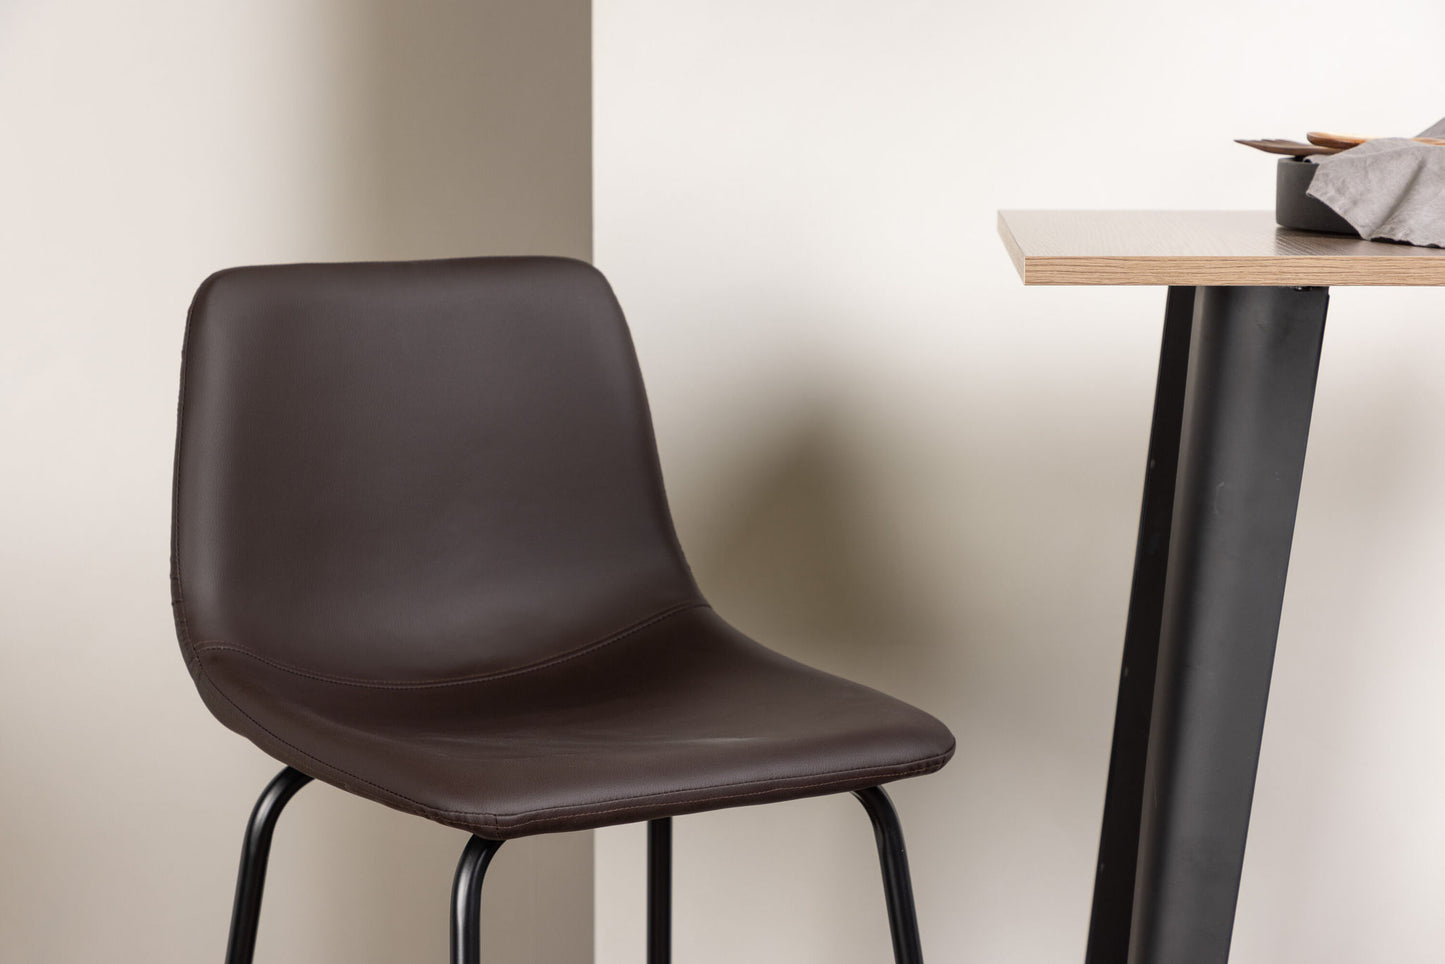 Tempe Bar Table - Black / Nature MDF +Alexi Bar Chair - Matte sort / mørkebrun pu _2